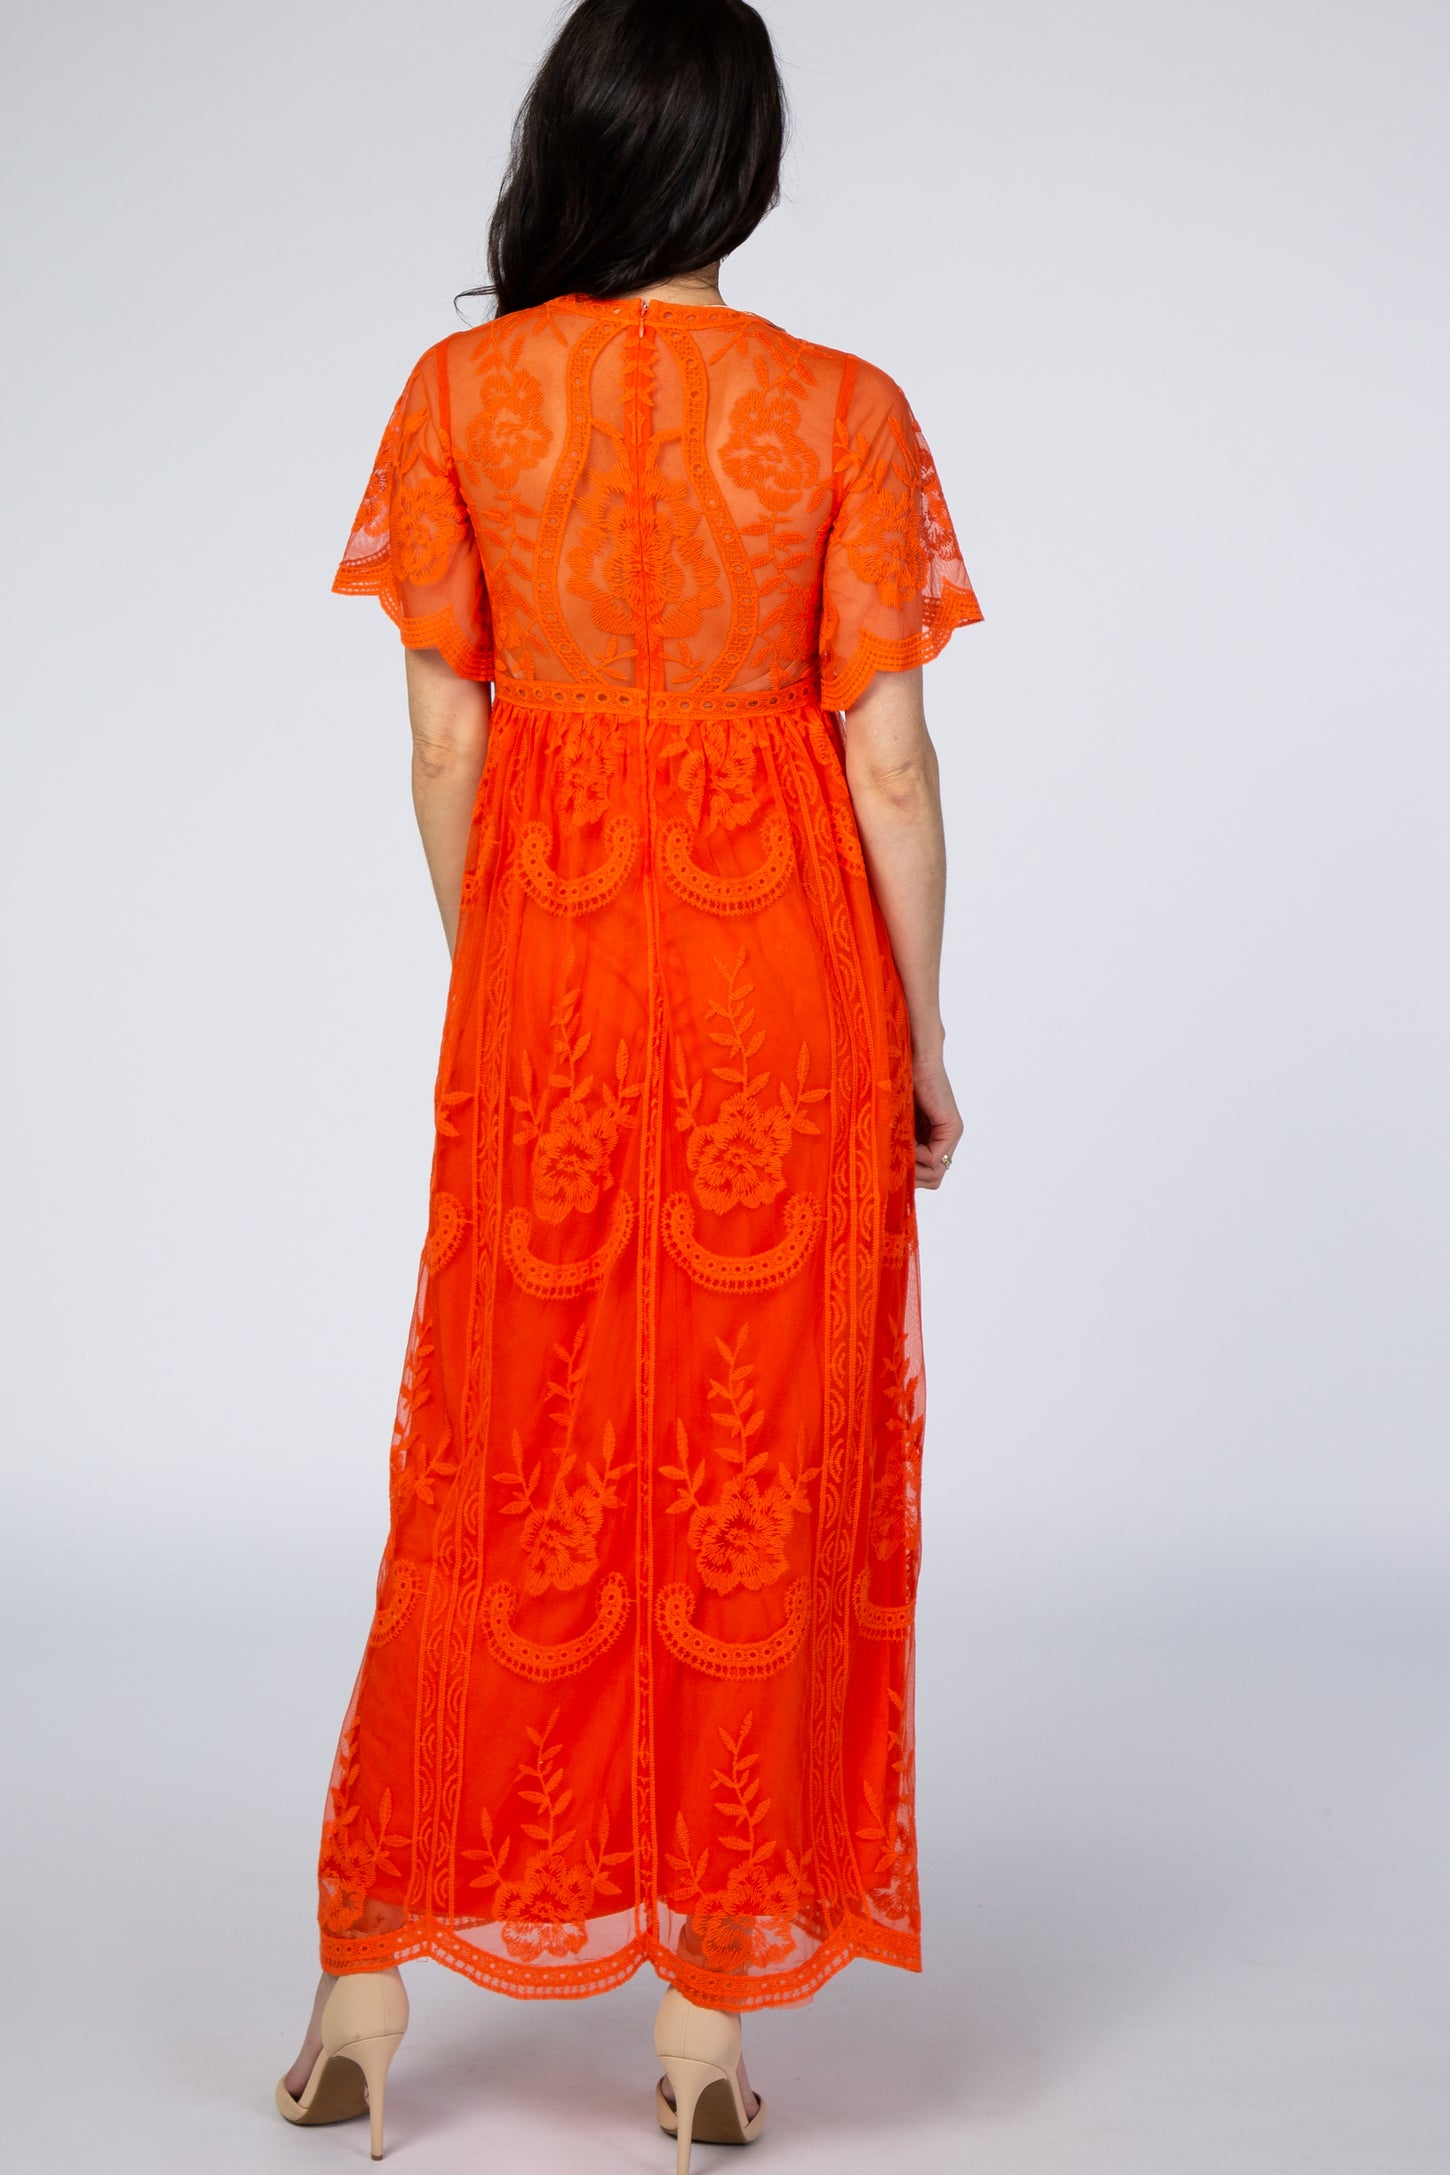 PinkBlush Neon Orange Lace Mesh Overlay Maxi Dress